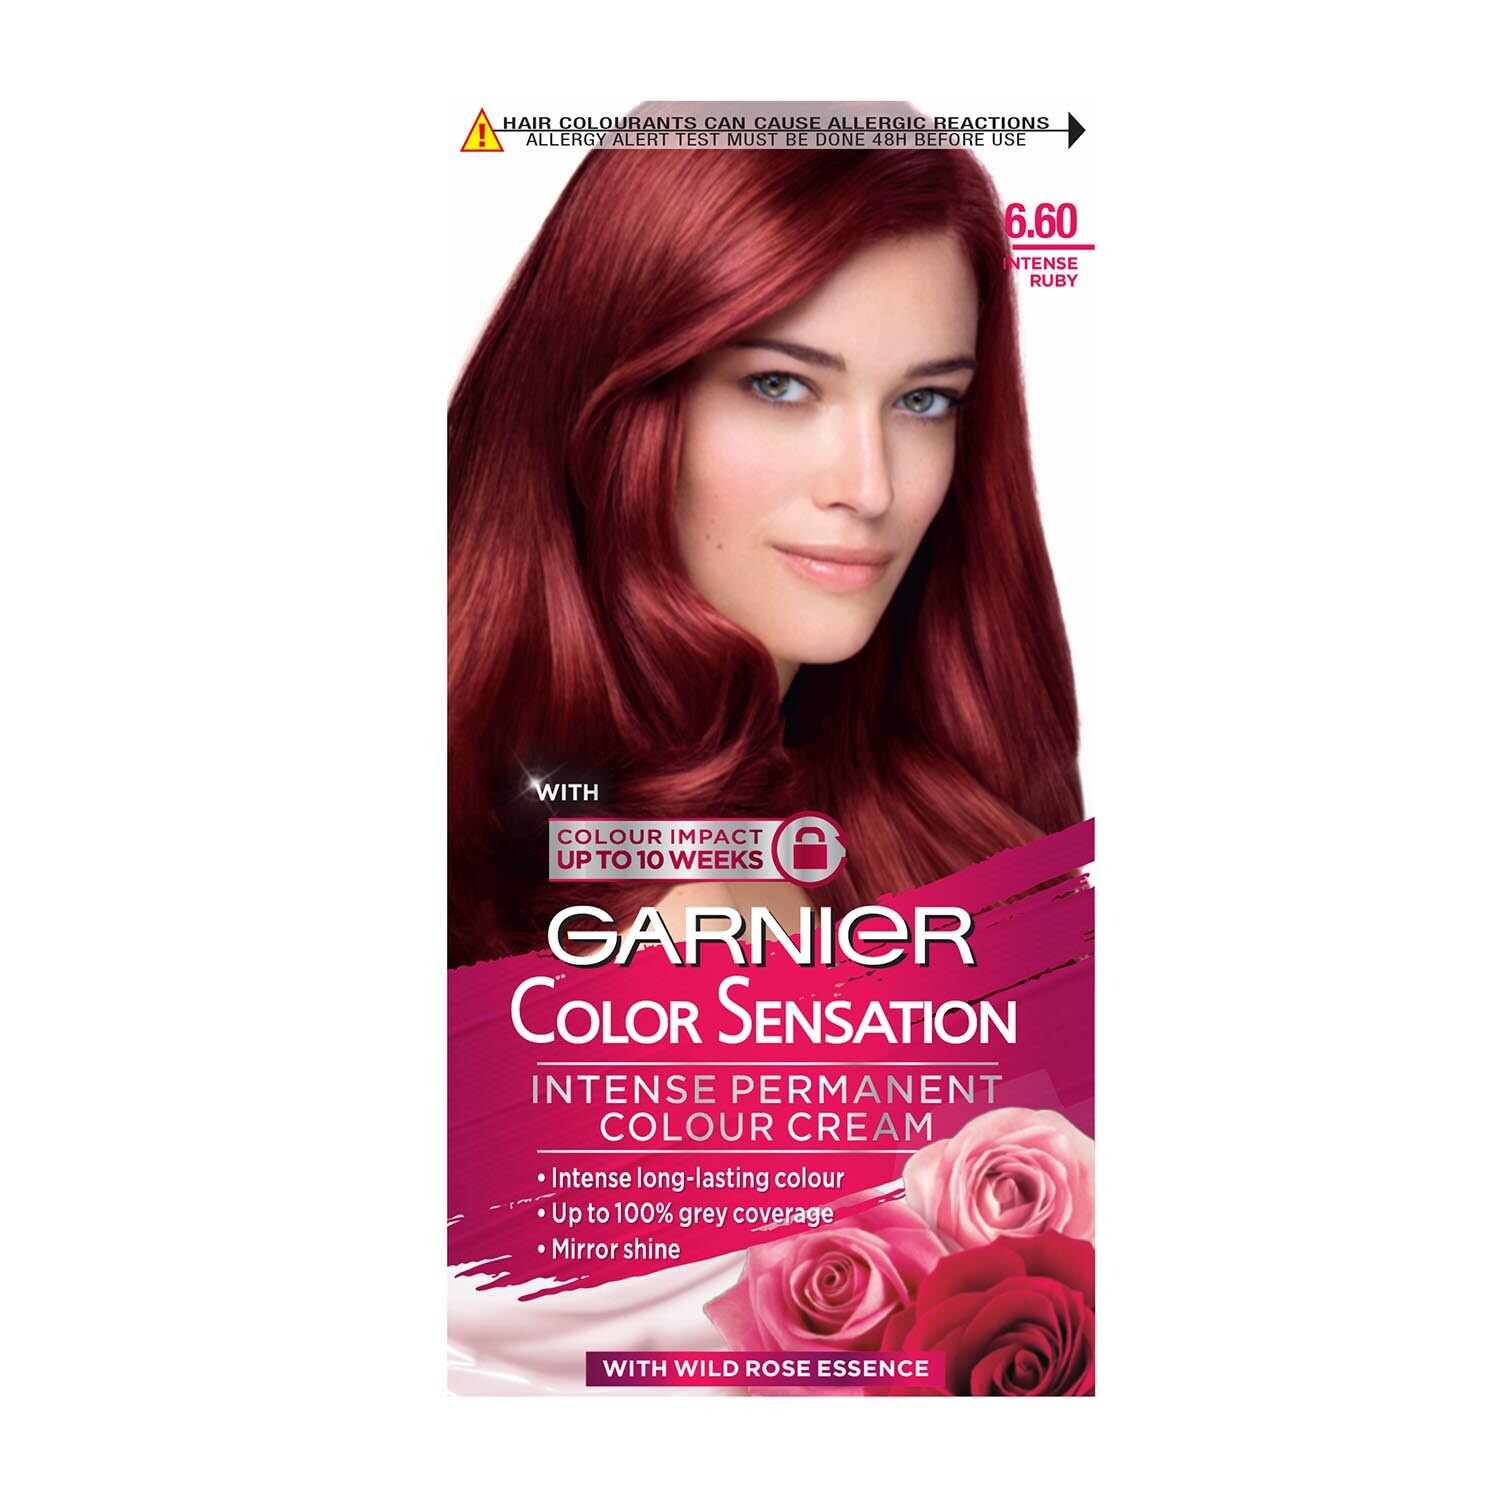 Garnier Colour Sensation Permanent Colour Cream - 6.60 Intense Ruby Image 1